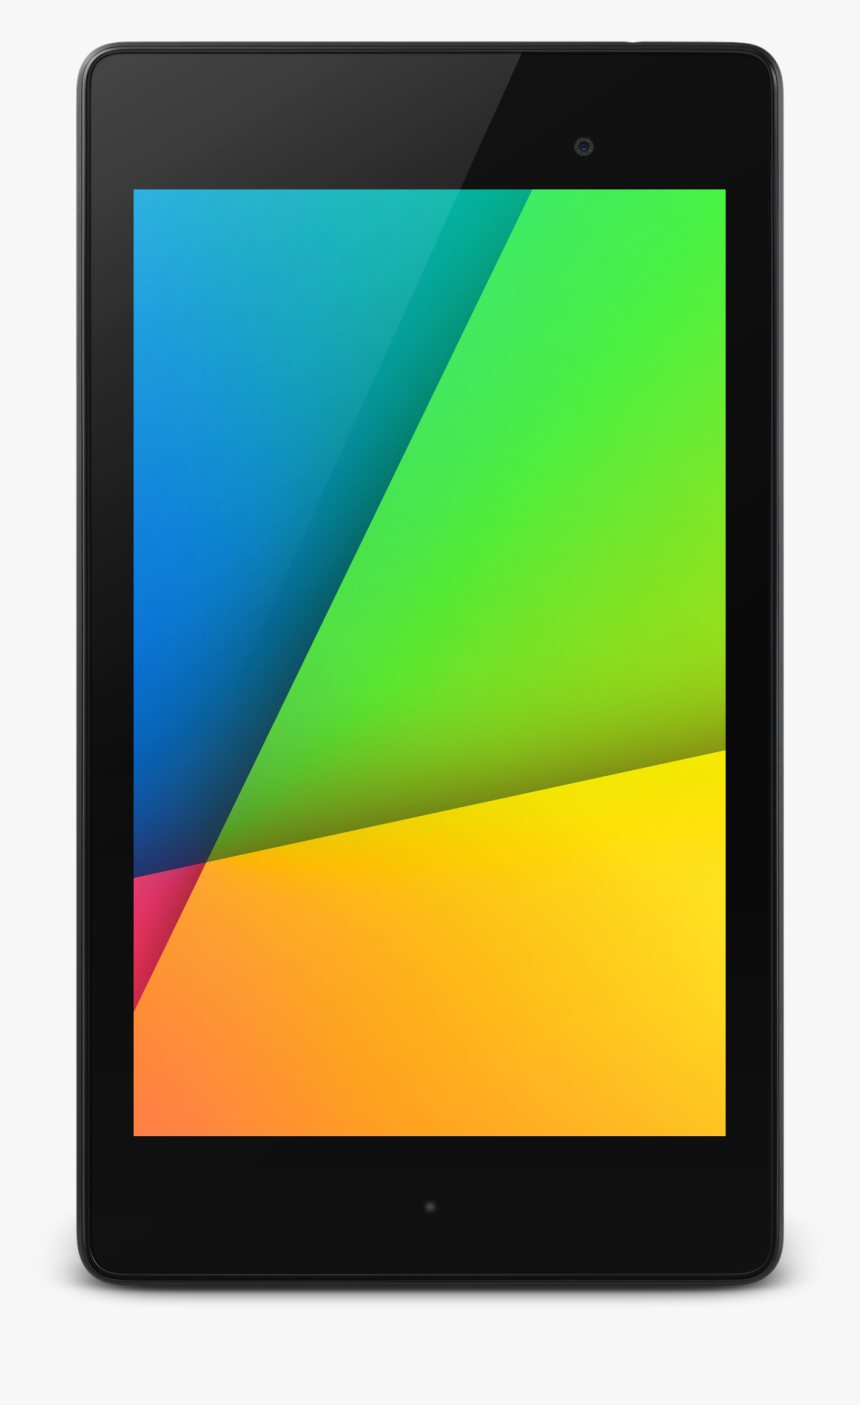 The Nexus 7 Tablet Has A 7-inch 